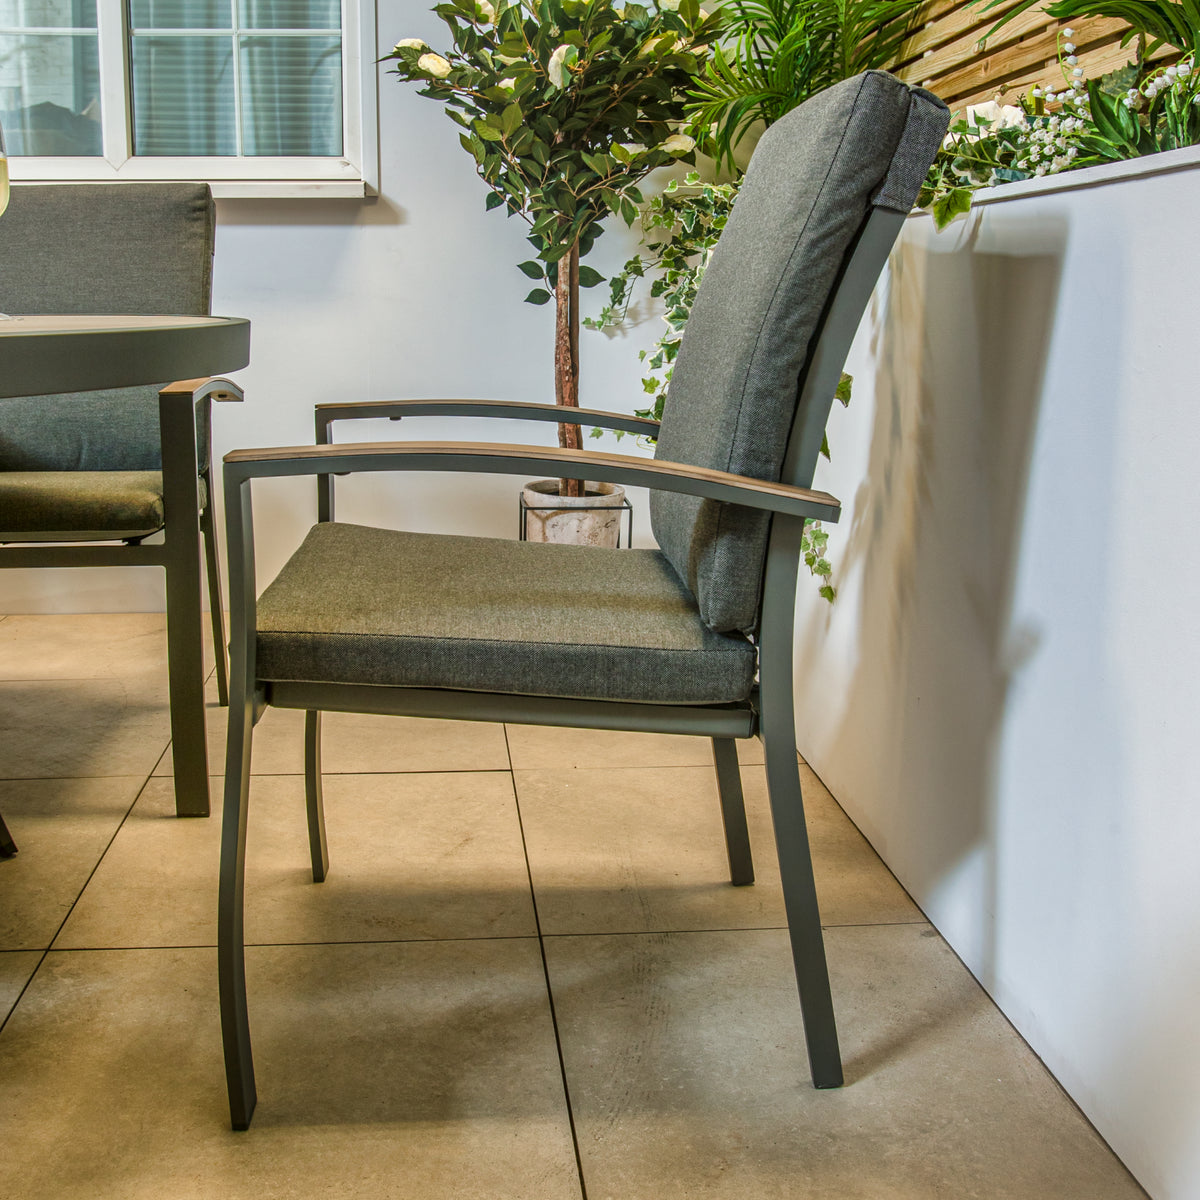 LG Outdoor Monza Aluminium 8 Seat Cushioned Armchair Garden Furniture Dining Set